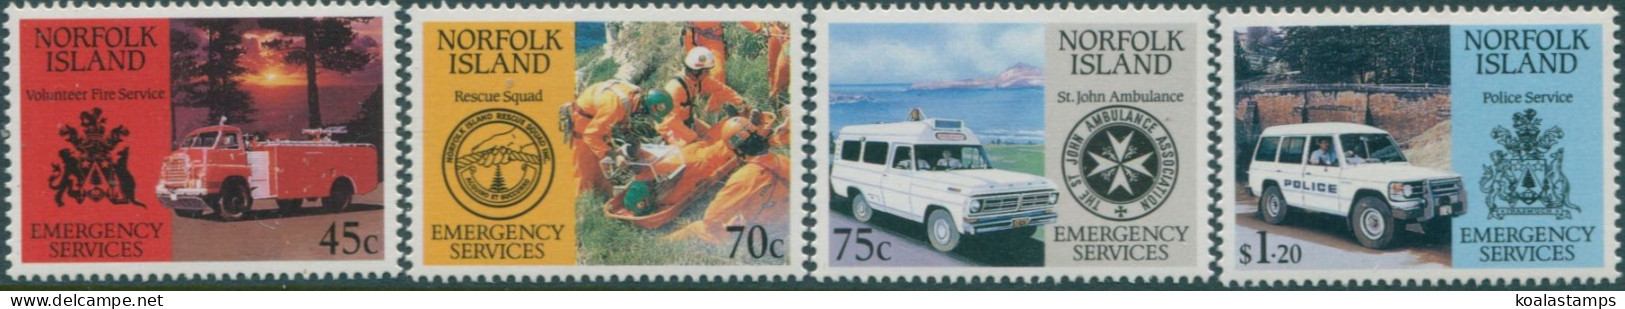 Norfolk Island 1993 SG546-549 Emergency Services Set MNH - Norfolkinsel